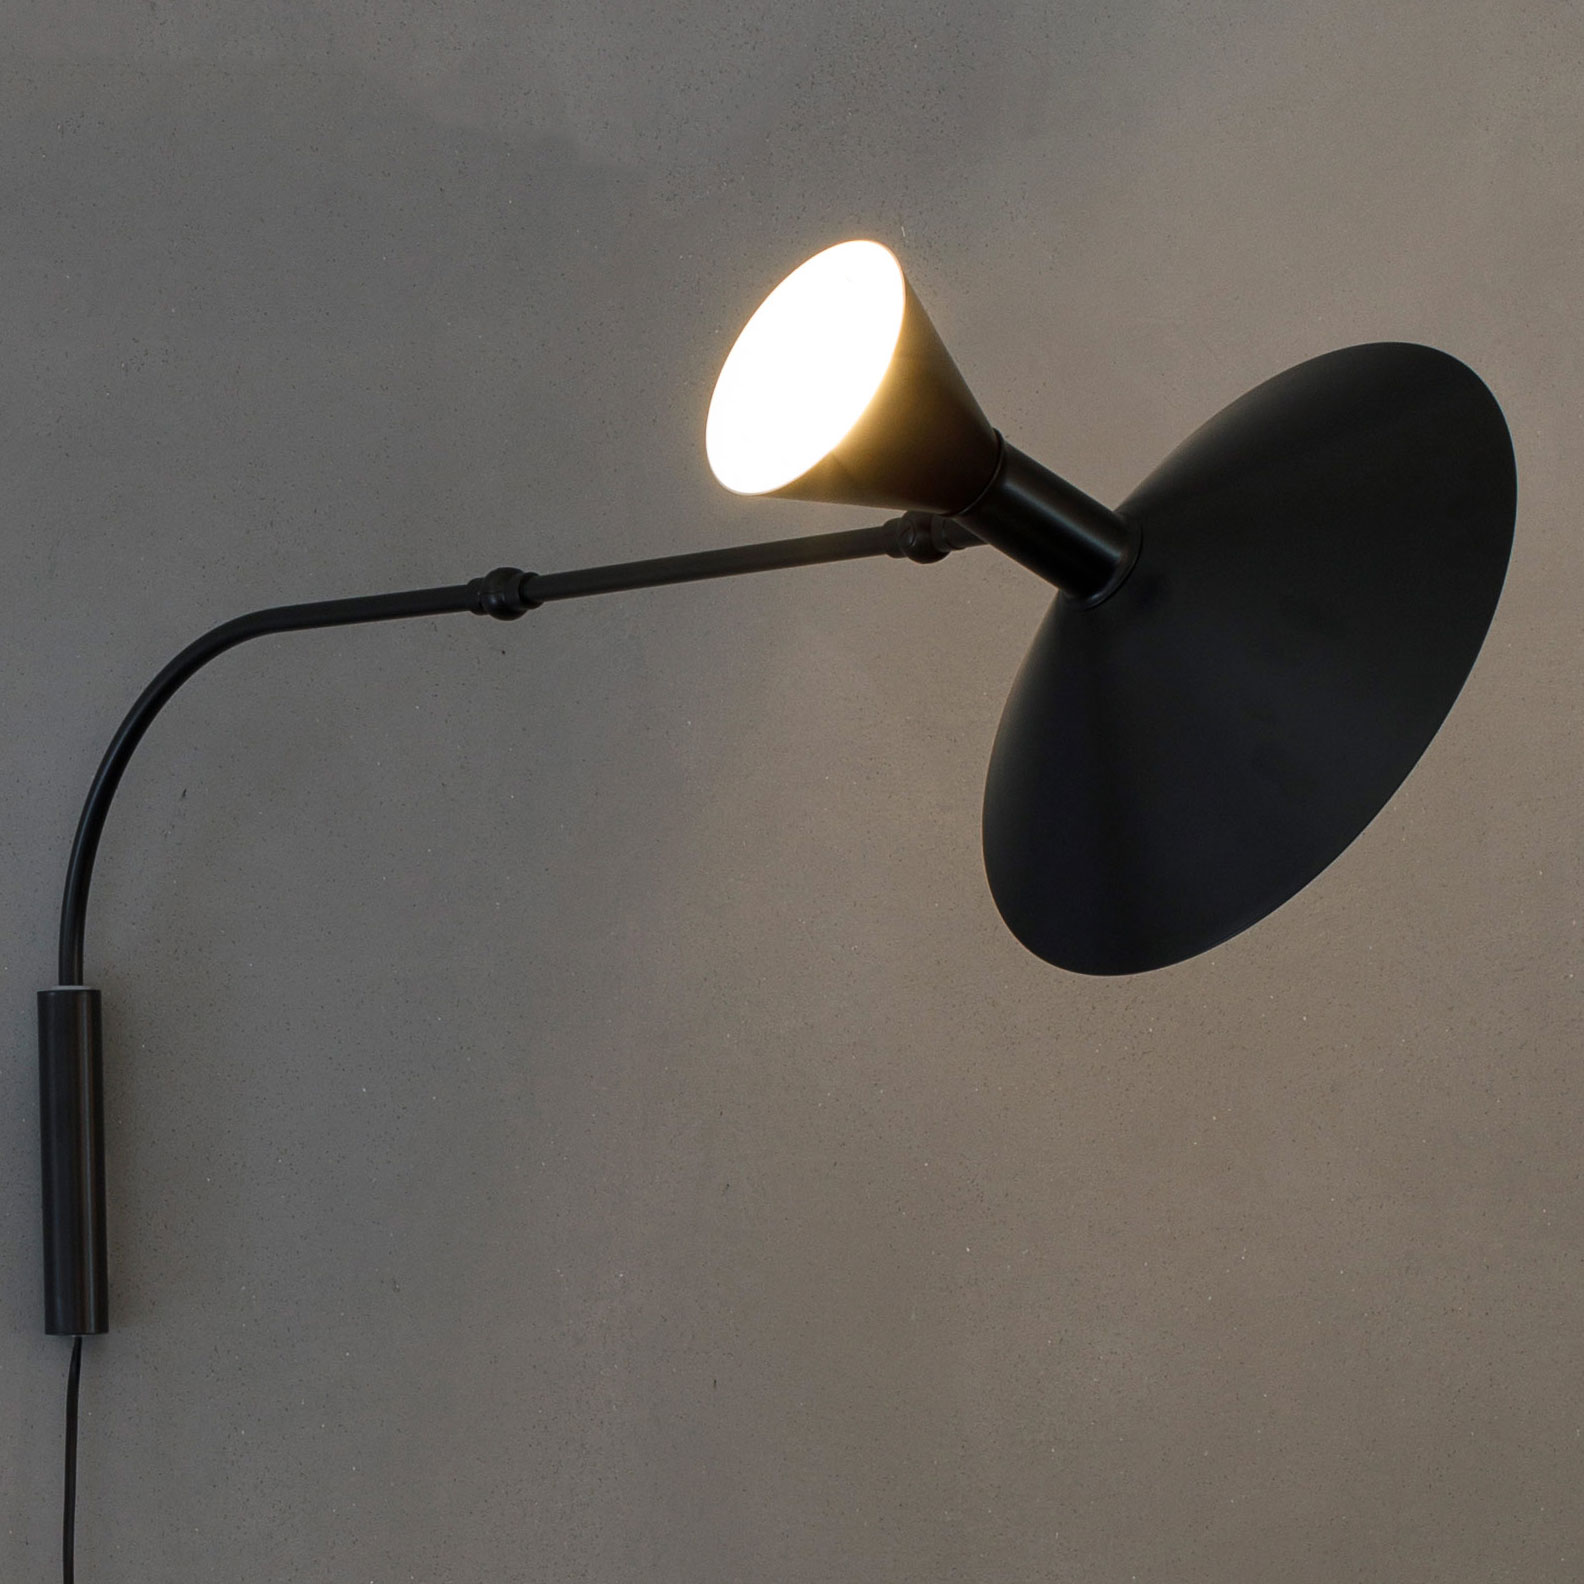 Frosset Bliver værre Compose Lampe de Marseille Mini Plug-In Wall Light by Nemo | LMM ENN 31 | NIL1170388